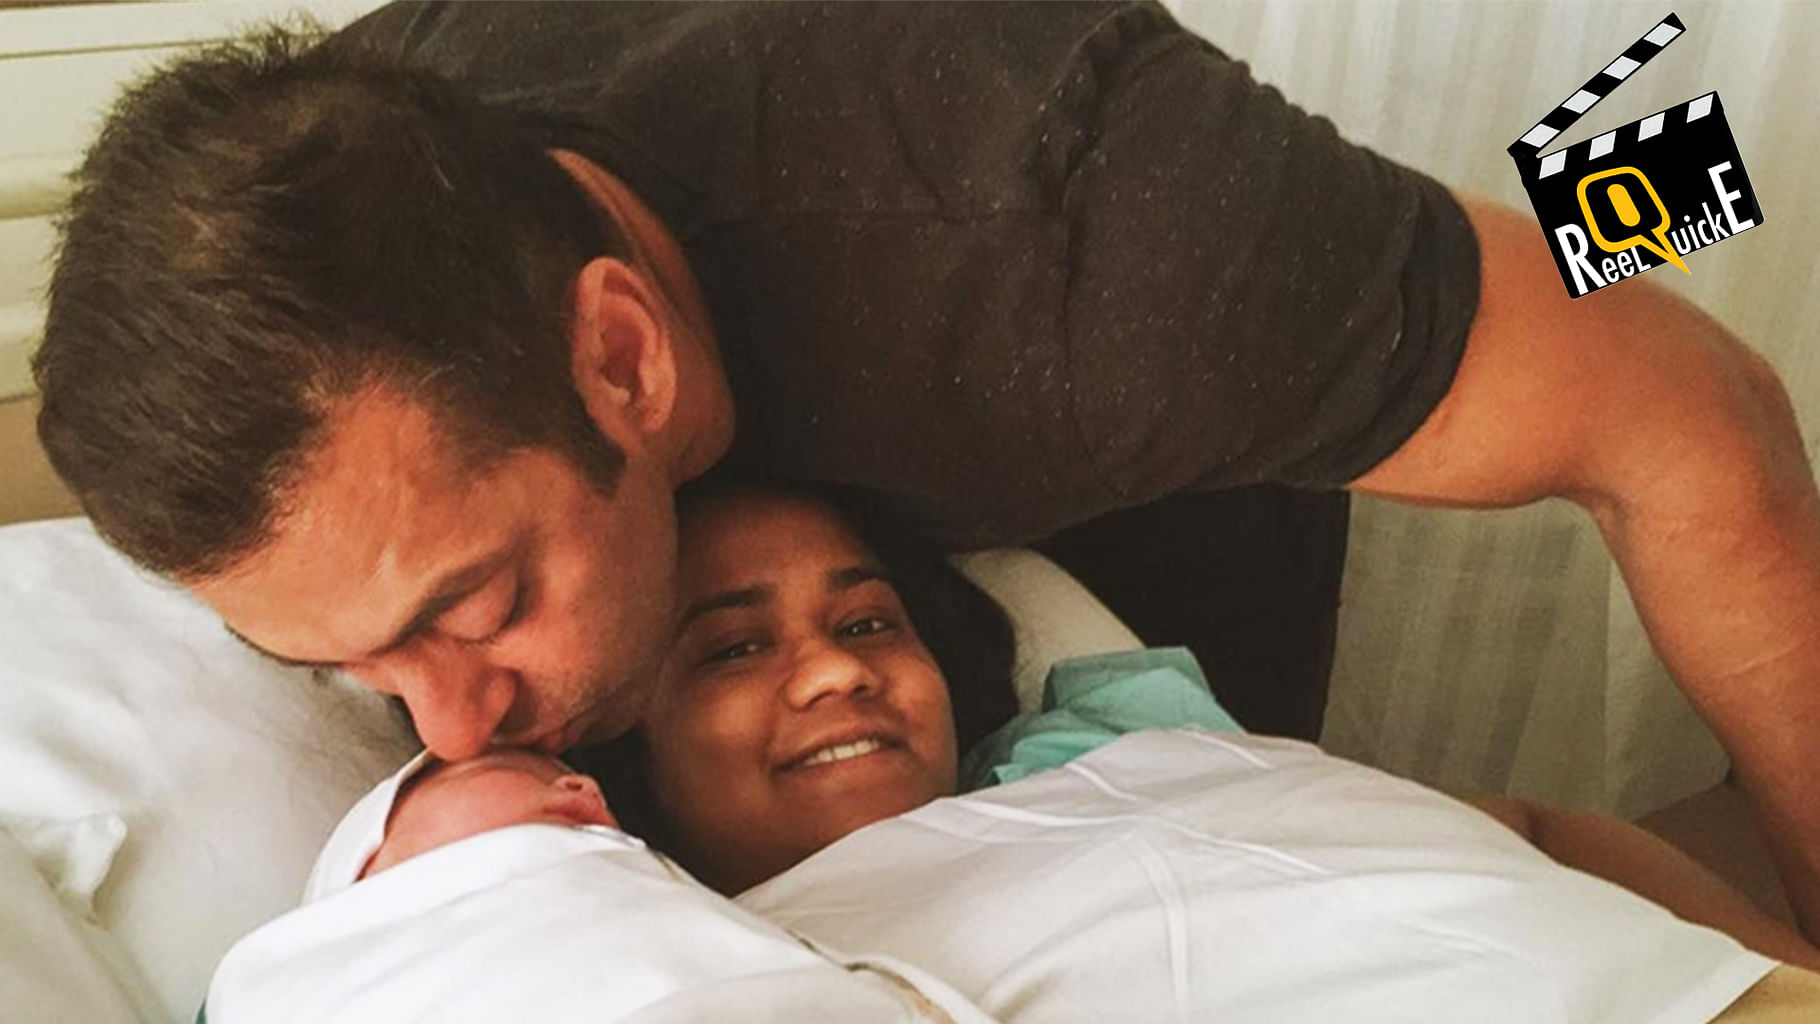 Salman Khan plants a kiss on nephew’s forehead (photo: Twitter/AyushSharma)